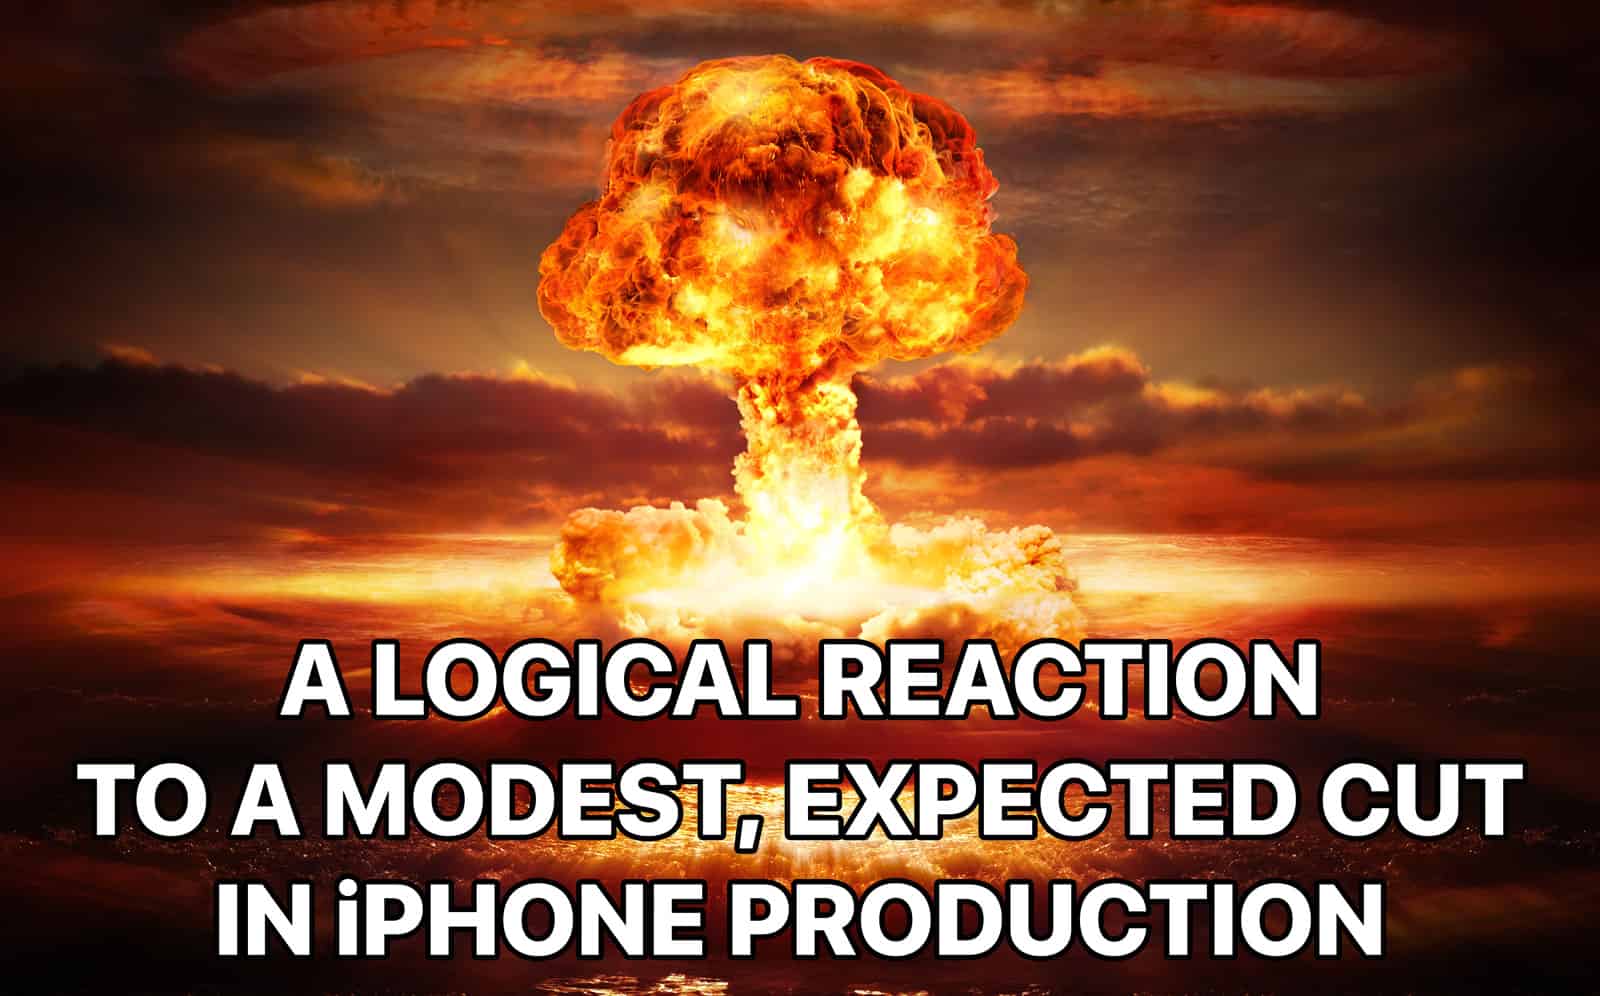 iphone production cut reaction